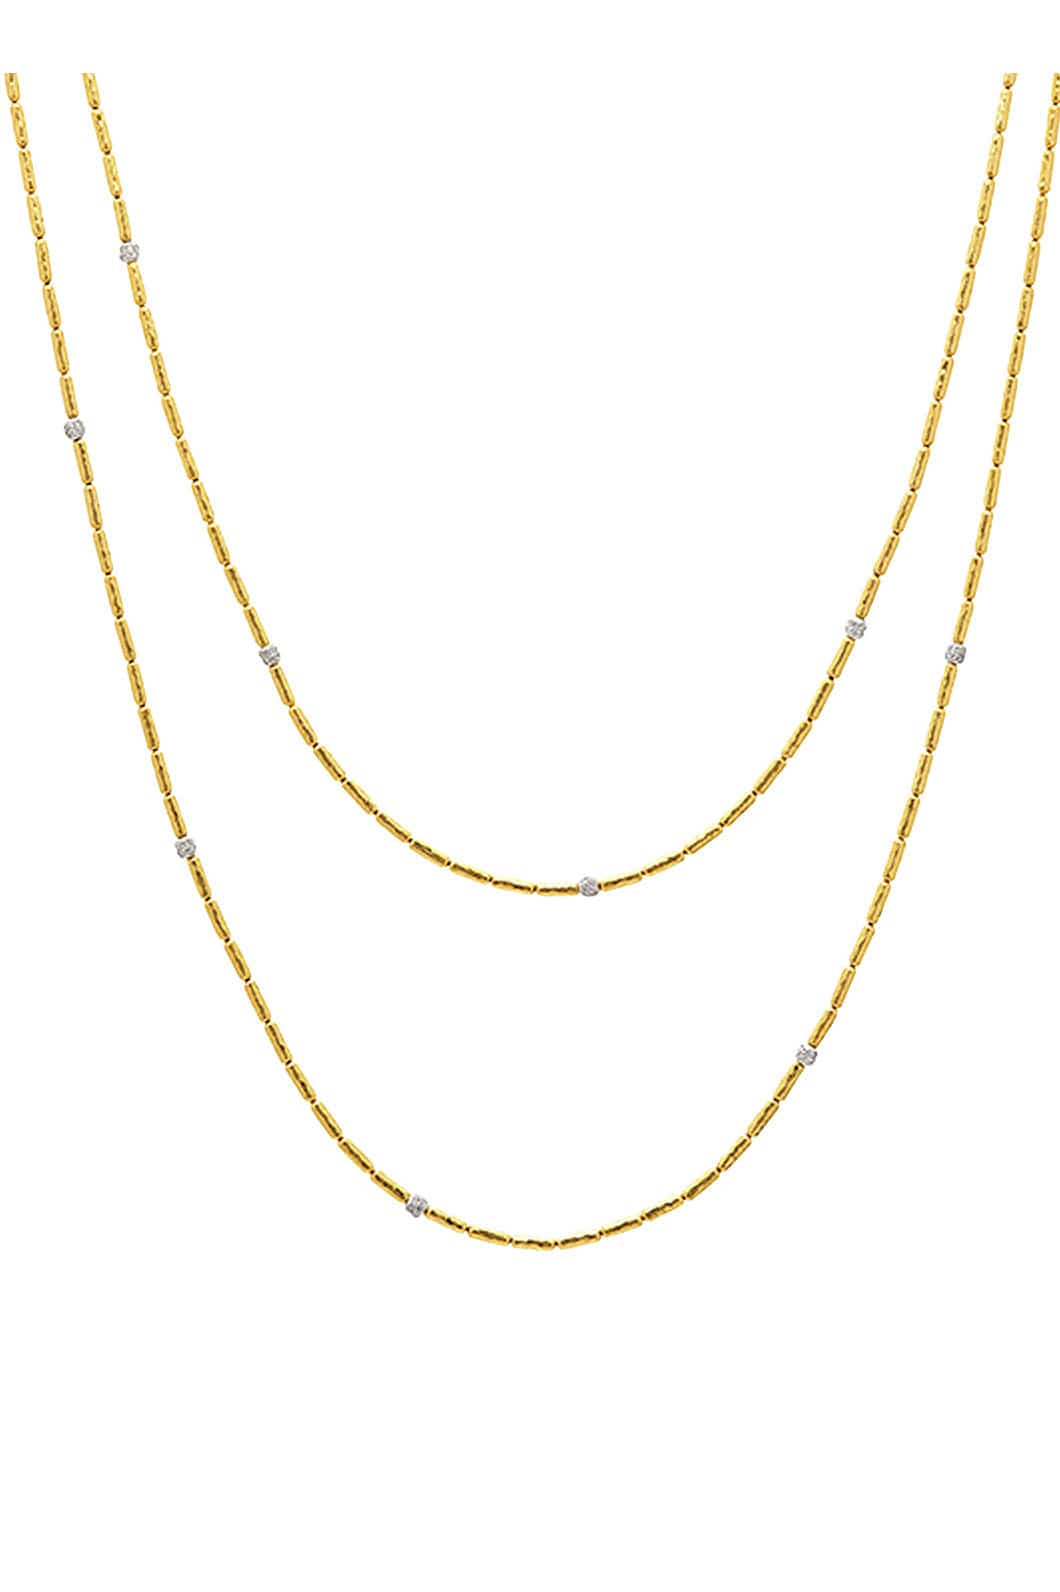 GURHAN-Vertigo Pave Diamond Single Strand Necklace-YELLOW GOLD